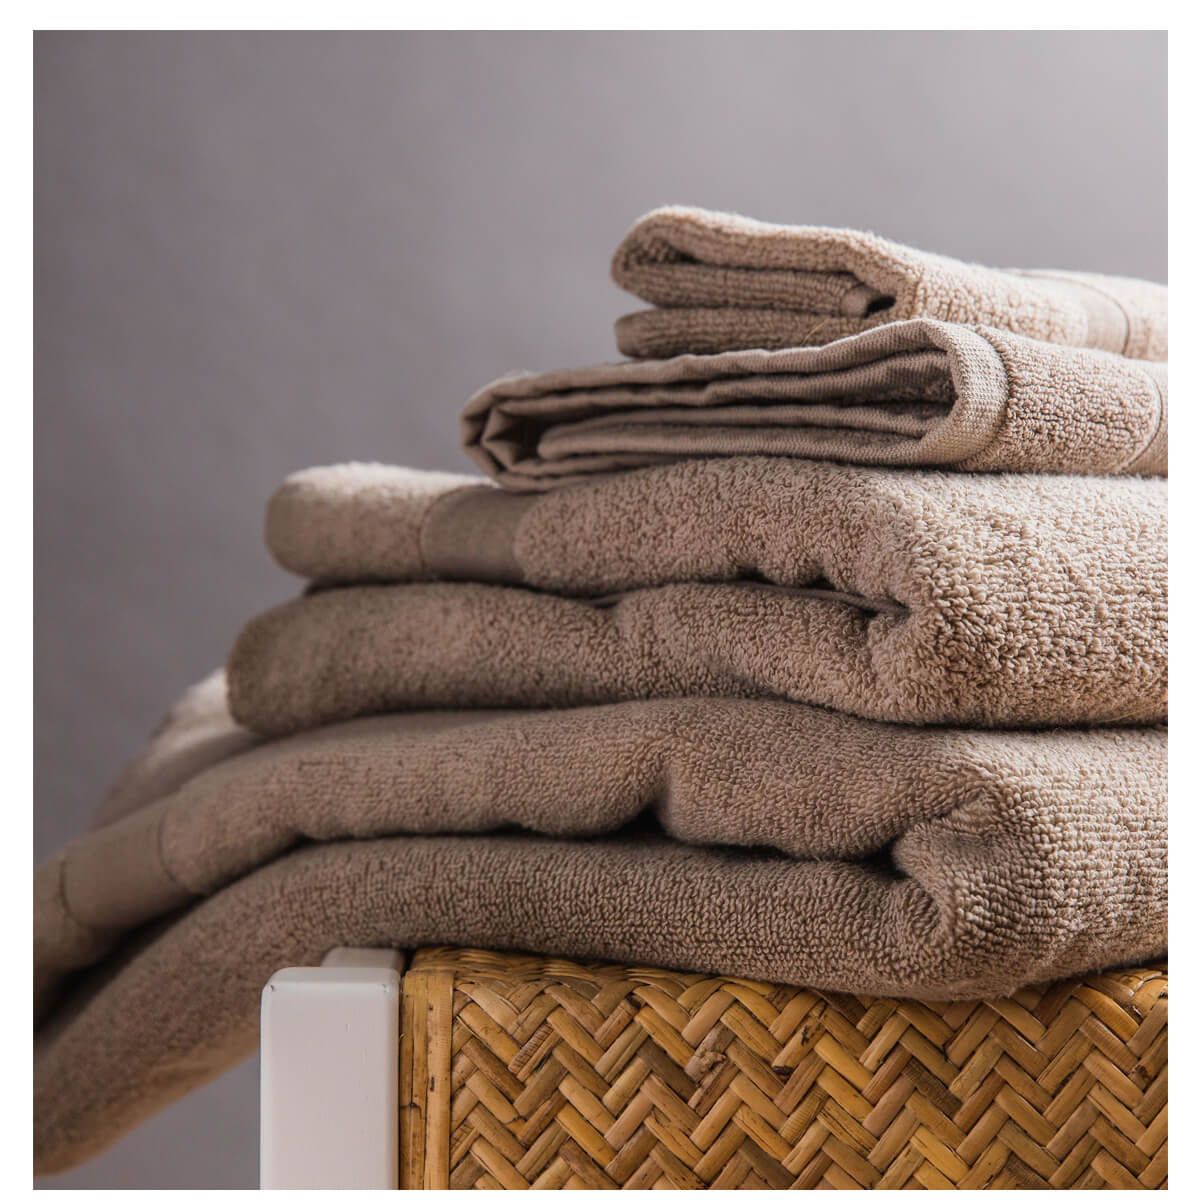 Luxury Cotton Monogrammed 8 Piece Towel Set - 5 Colors Available